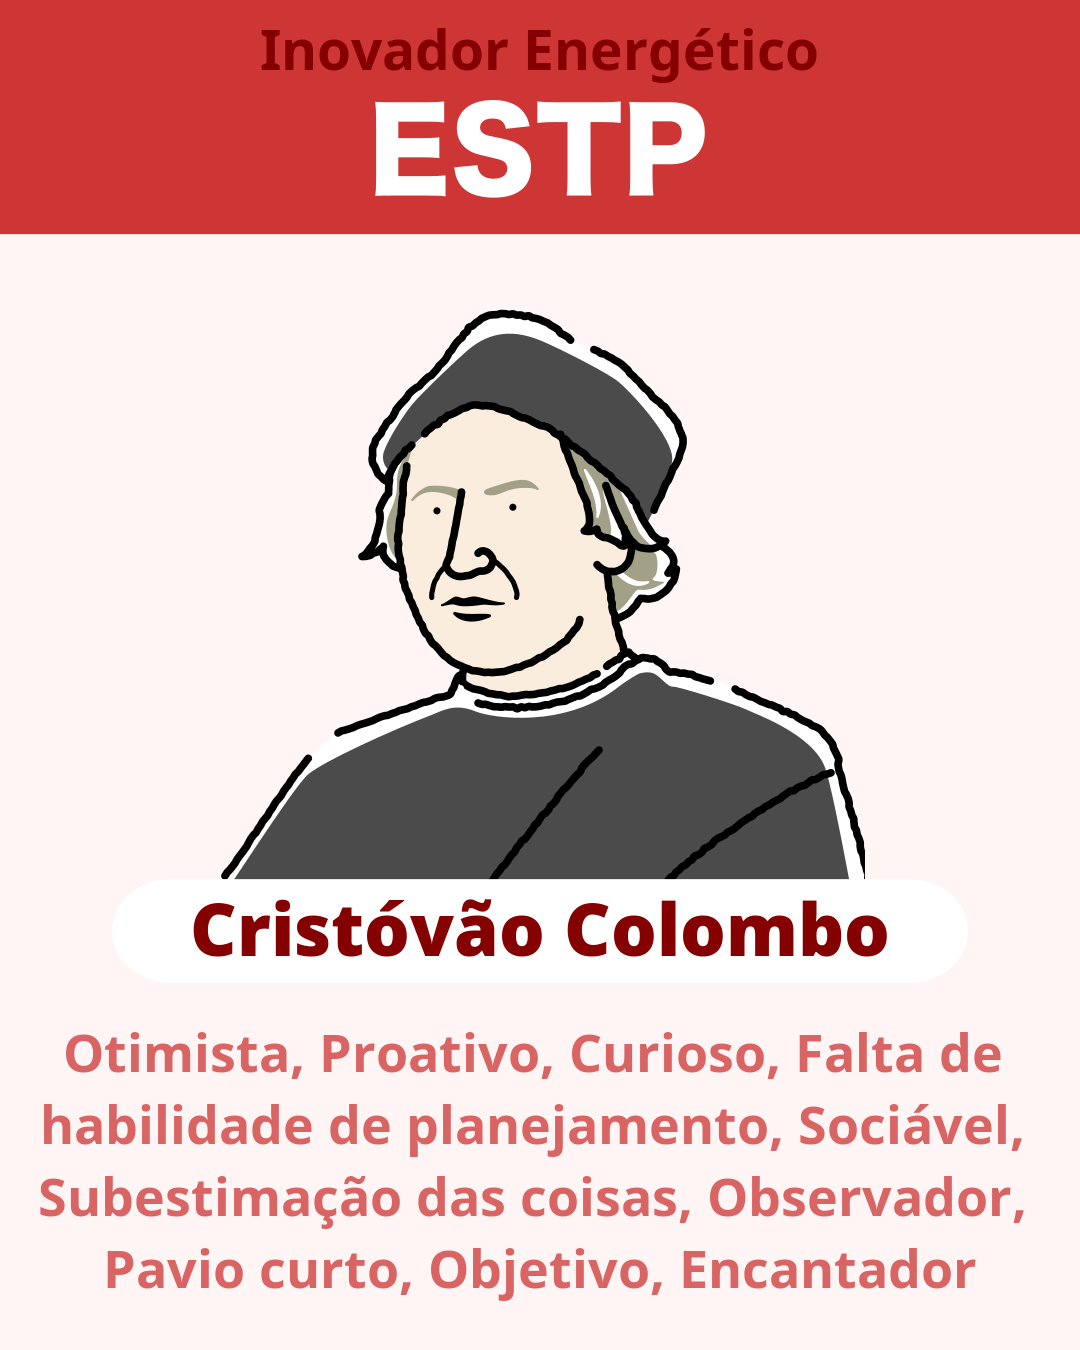 Cristóvão Colombo - ESTP